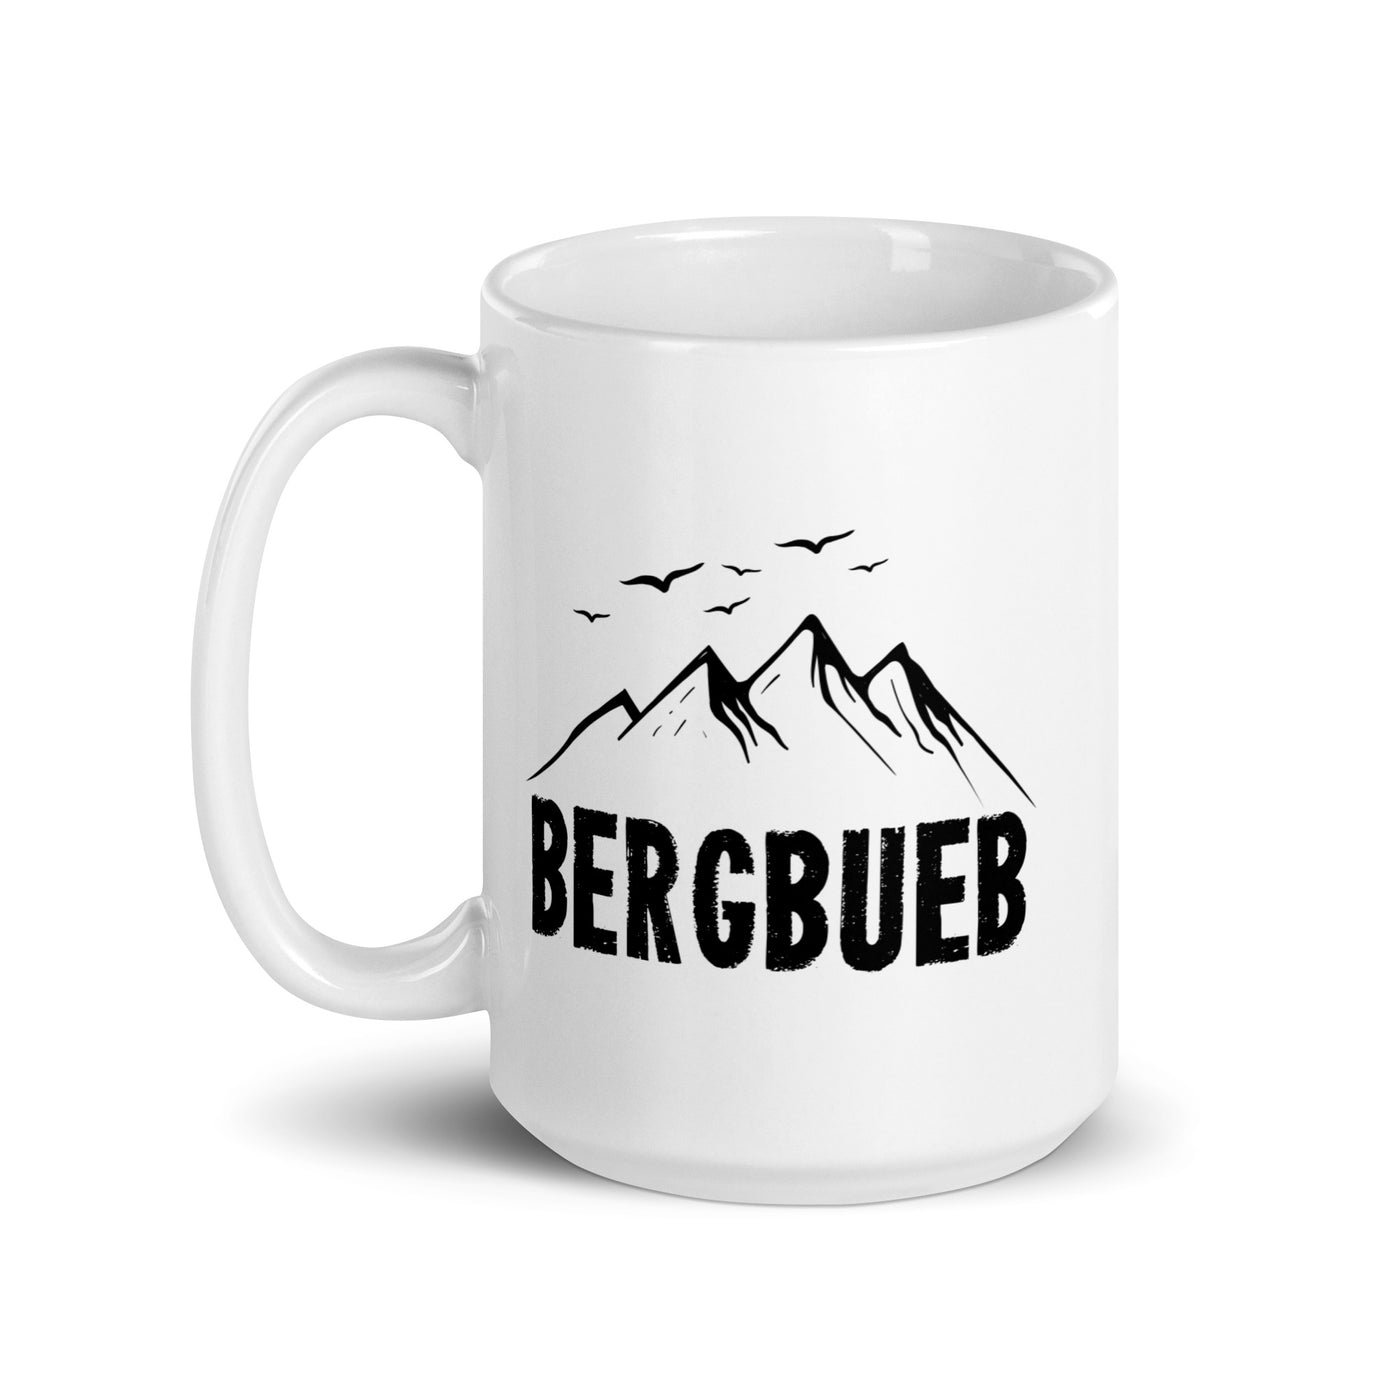 Bergbueb - Tasse berge